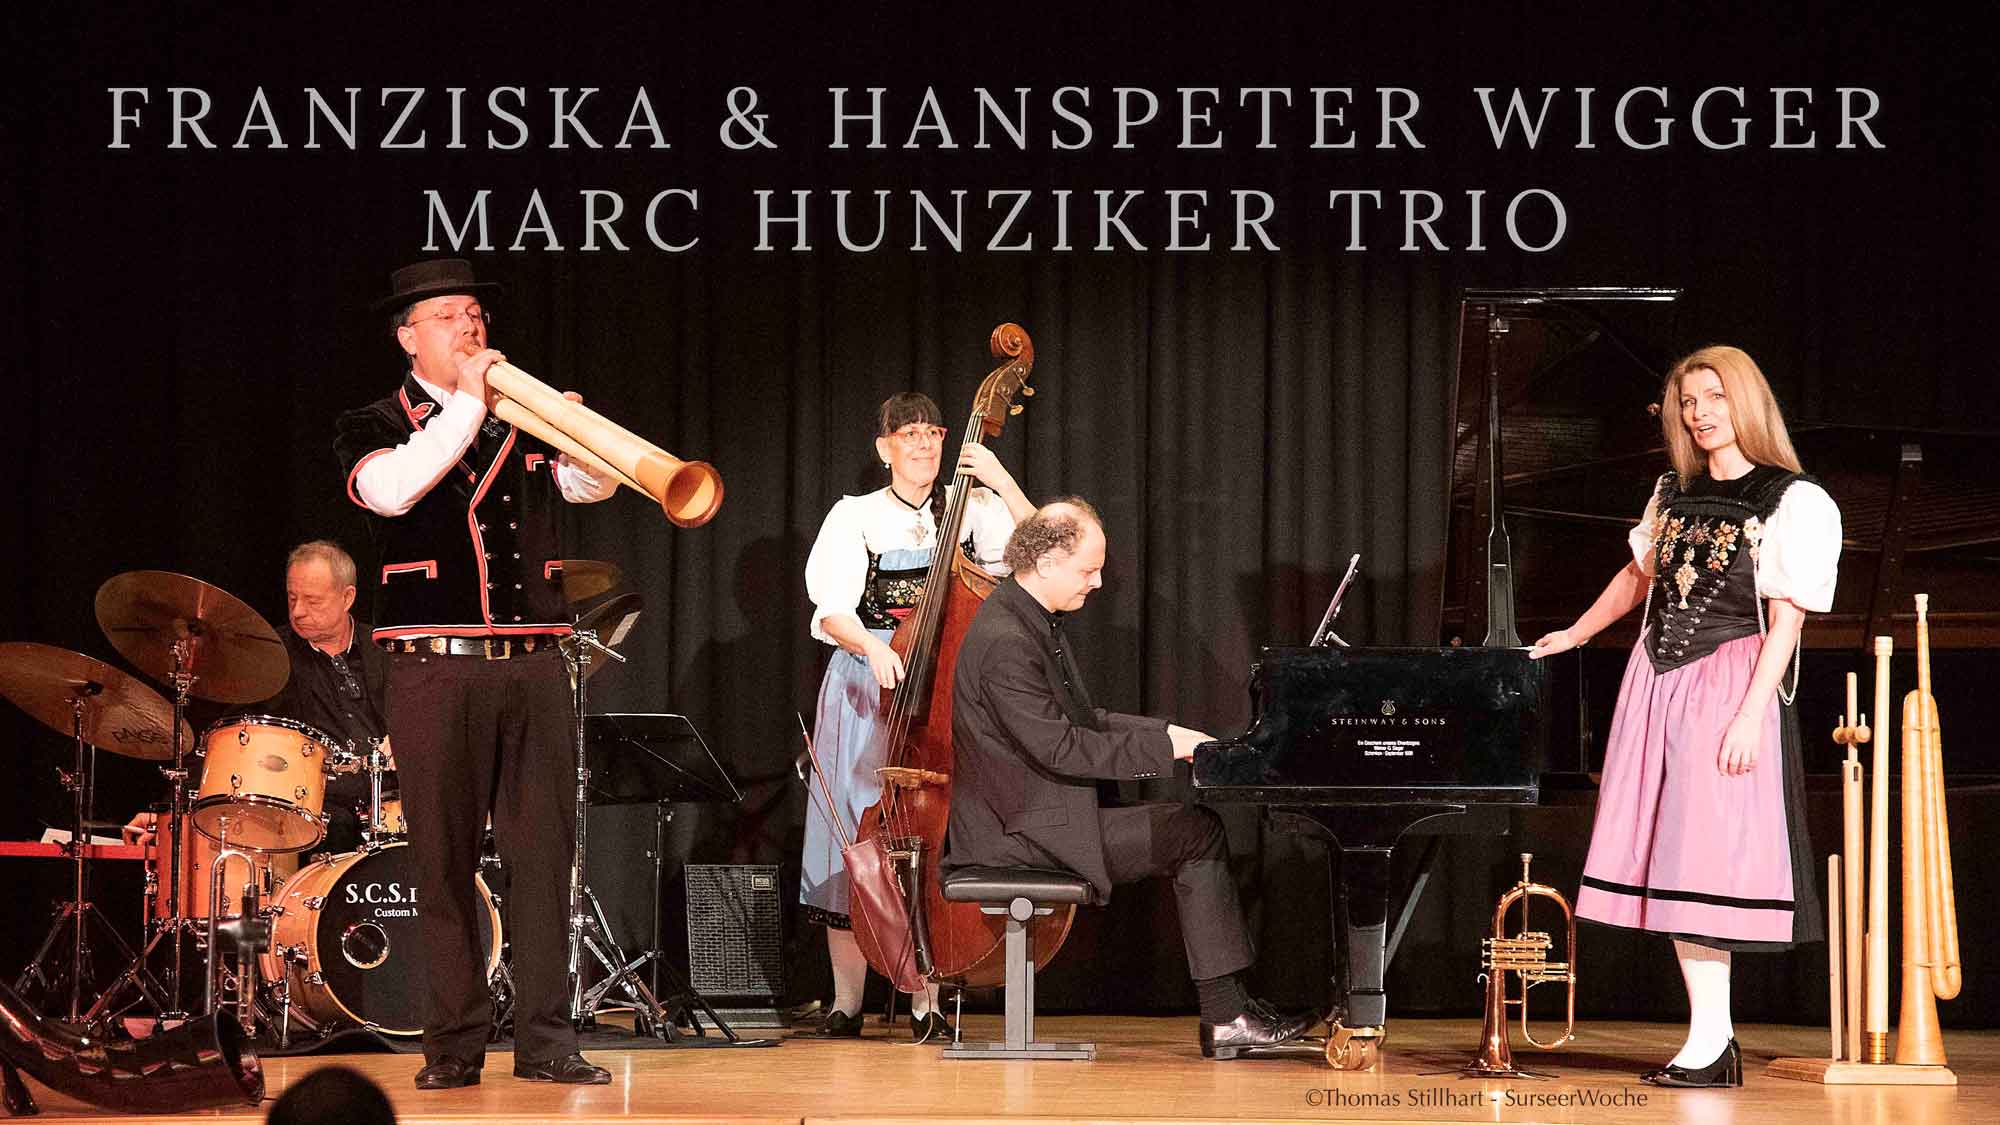 Franziska & Hanspeter Wigger, Marc Hunziker Trio